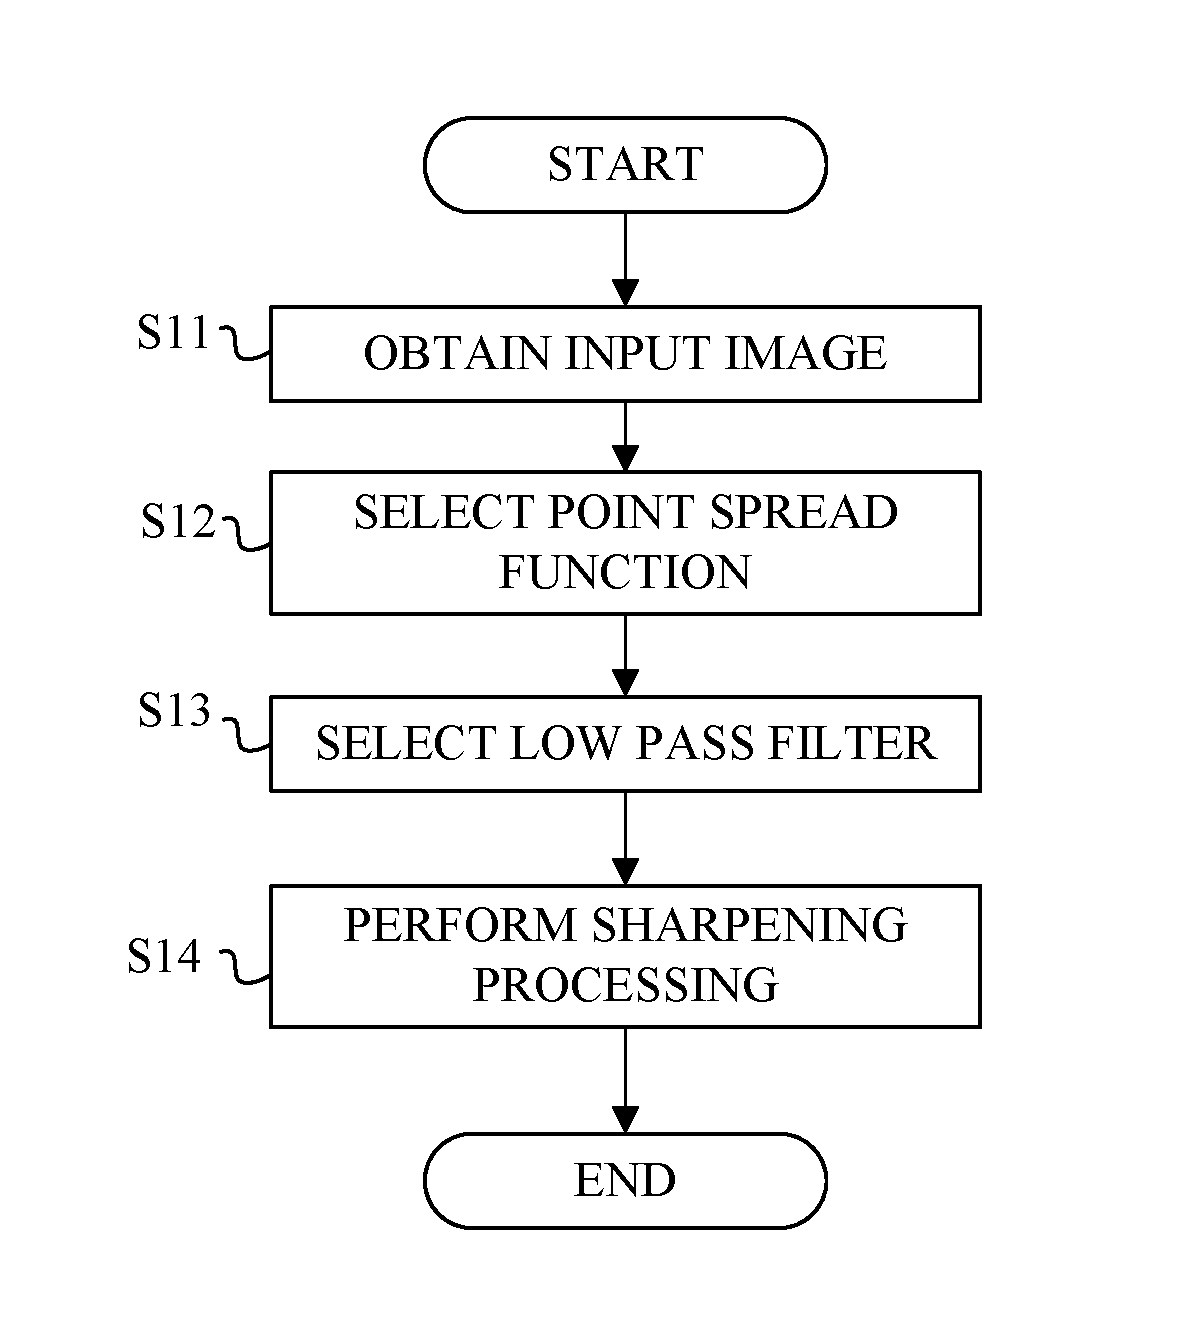 Image processing apparatus, optical apparatus, image processing method, and non-transitory computer-readable storage medium